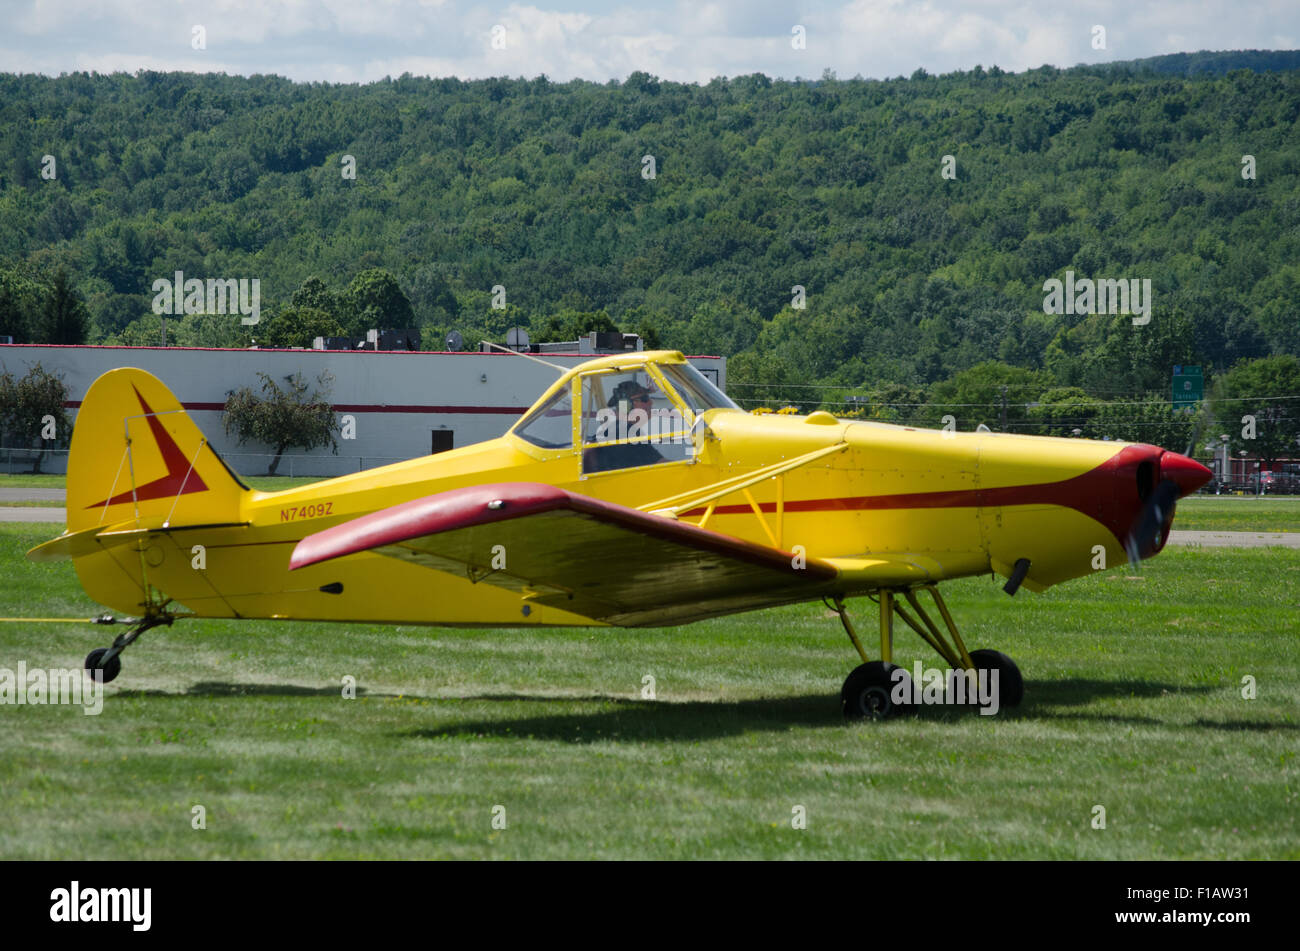 Towing sailplane on Dansville airport grass runway. Stock Photo